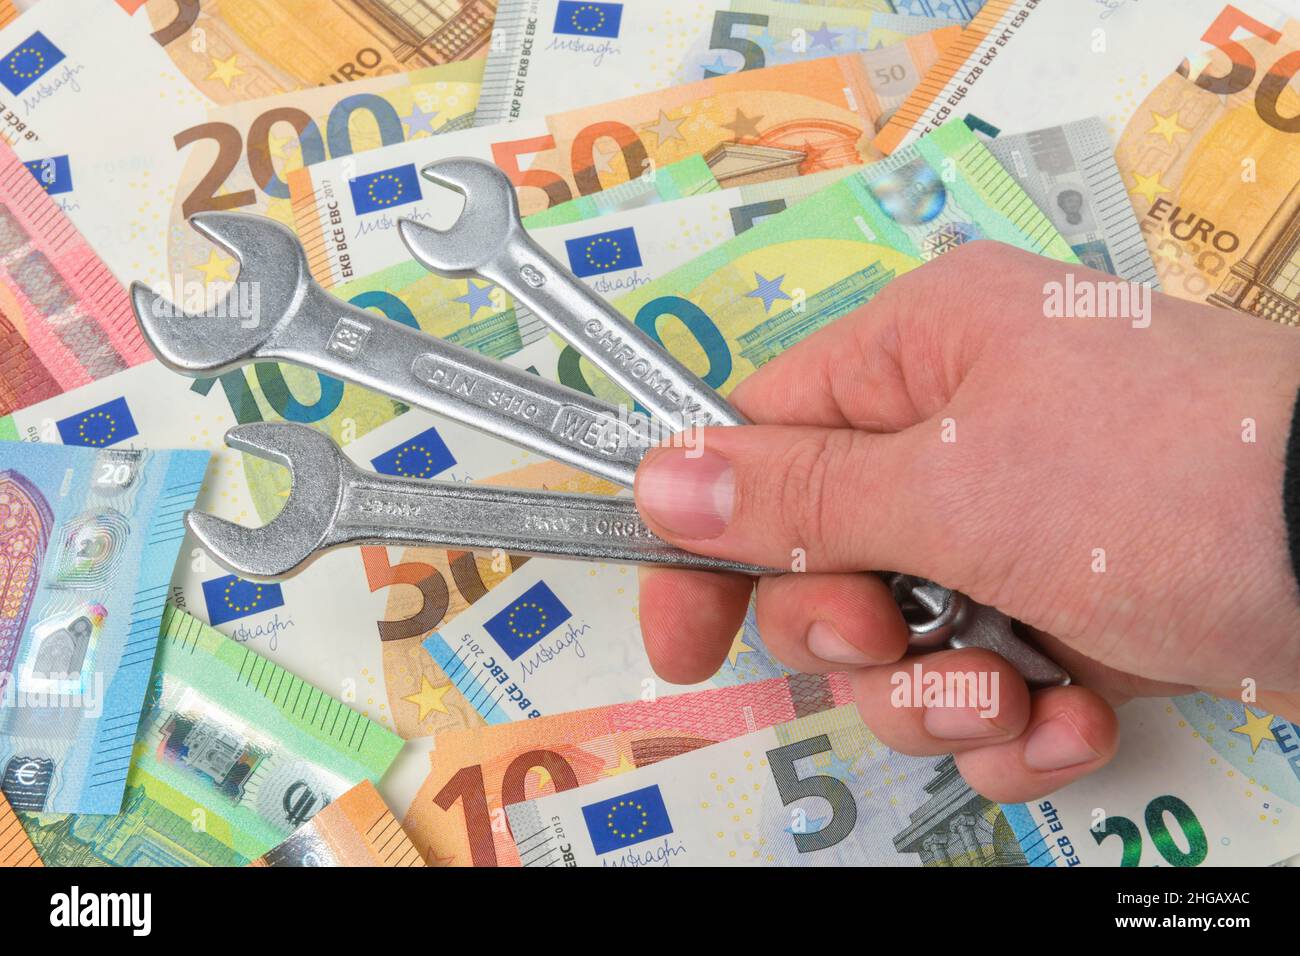 Spanner, money, euro notes, symbol photo craftsman costs, studio shot Stock Photo